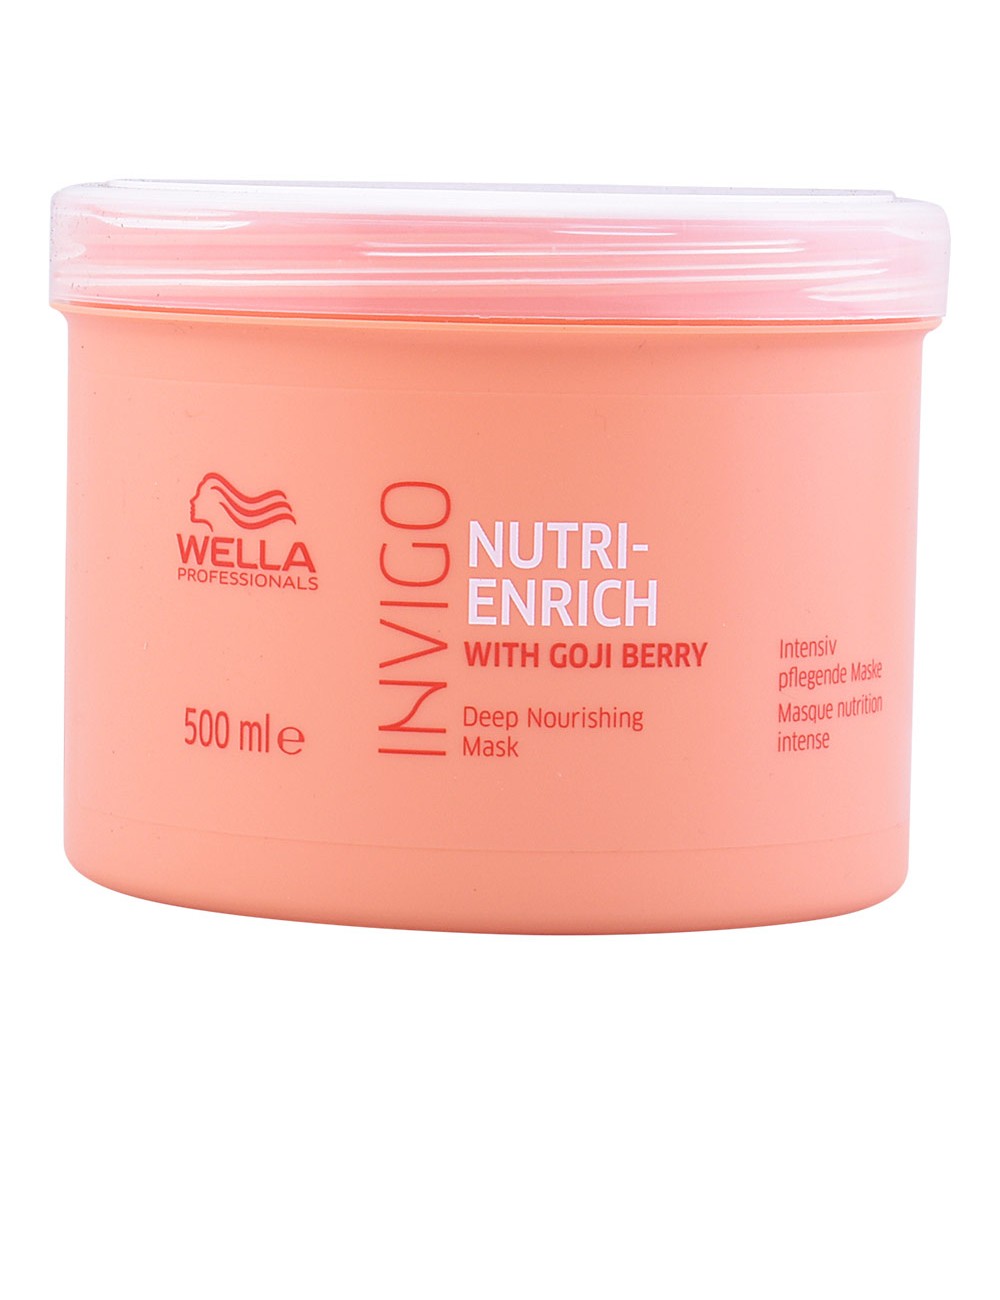 INVIGO NUTRI-ENRICH mask 500 ml